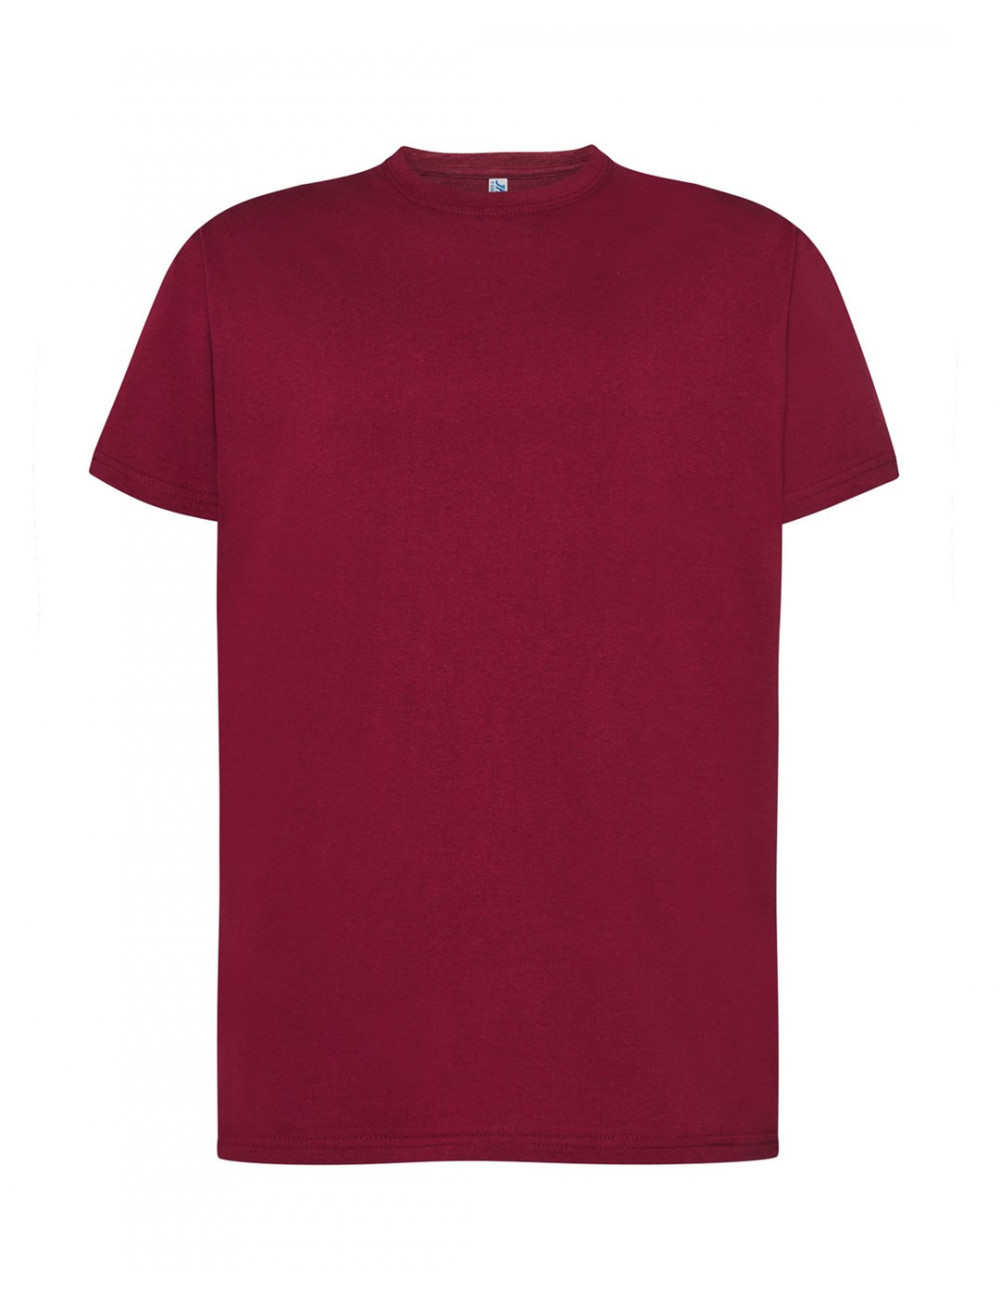 Men`s t-shirt tsra 190 premium burgundy Jhk